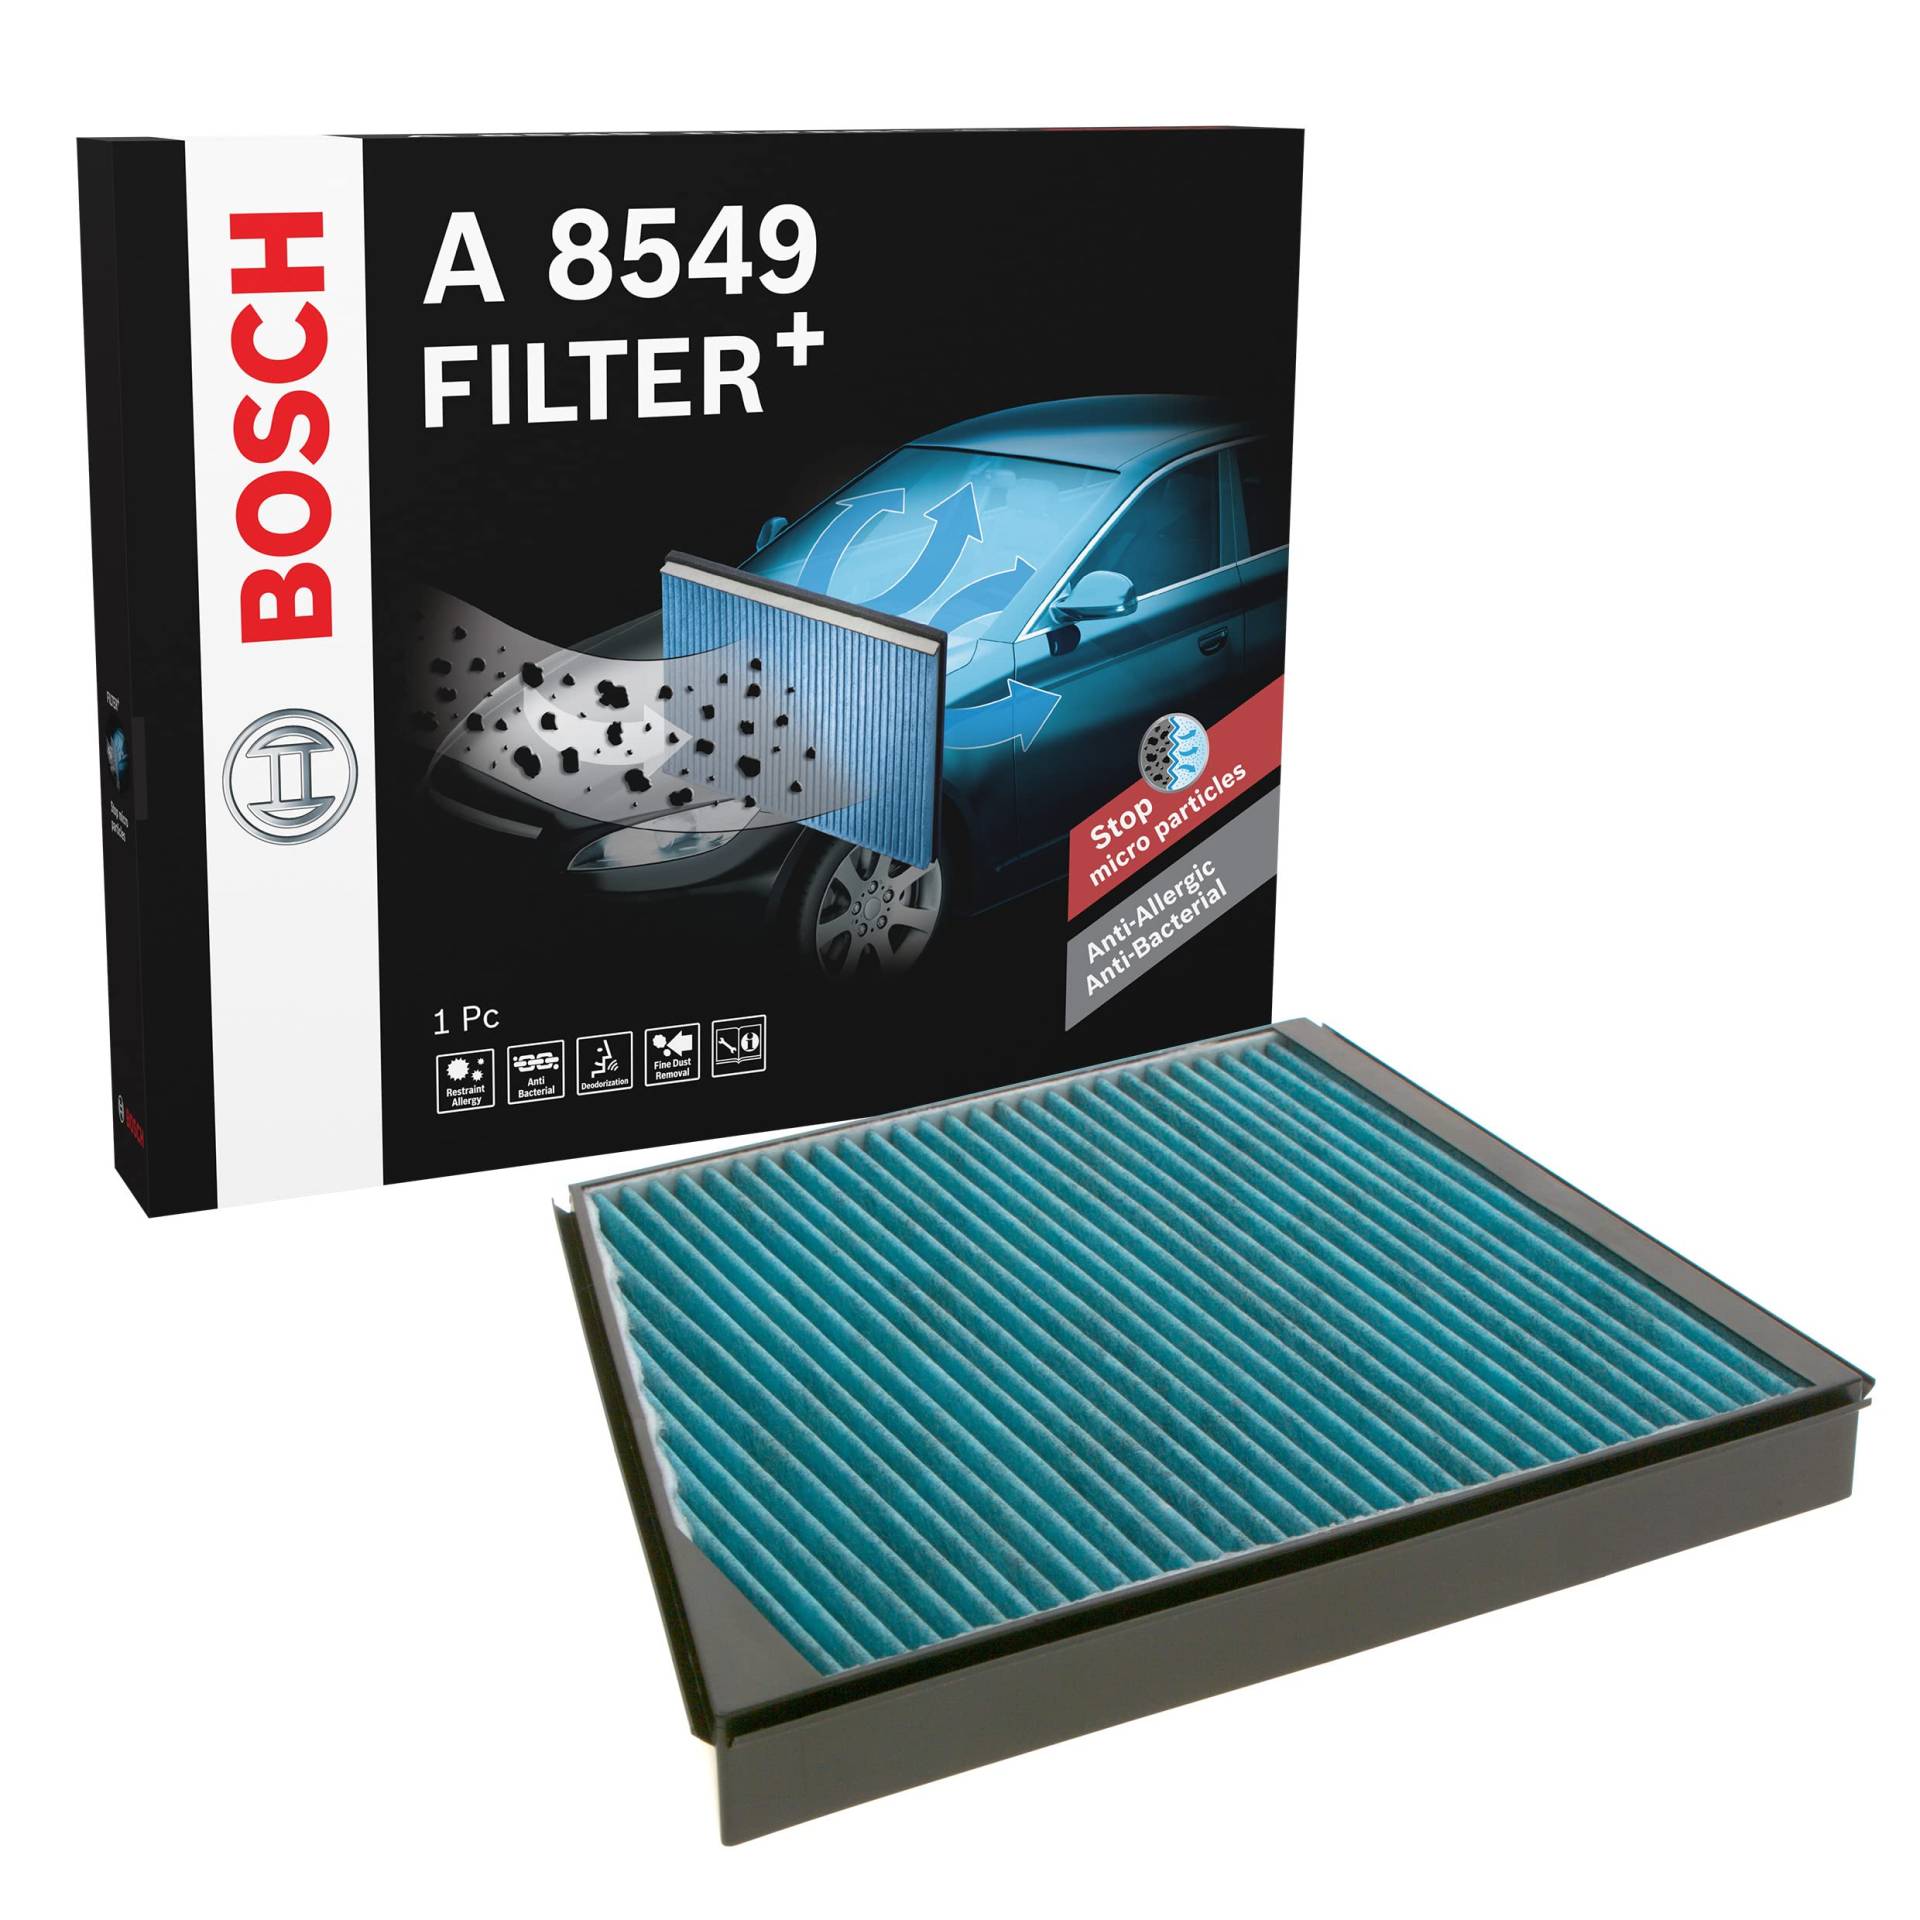 Bosch A8549 - Innenraumfilter Filter+ von Bosch Automotive